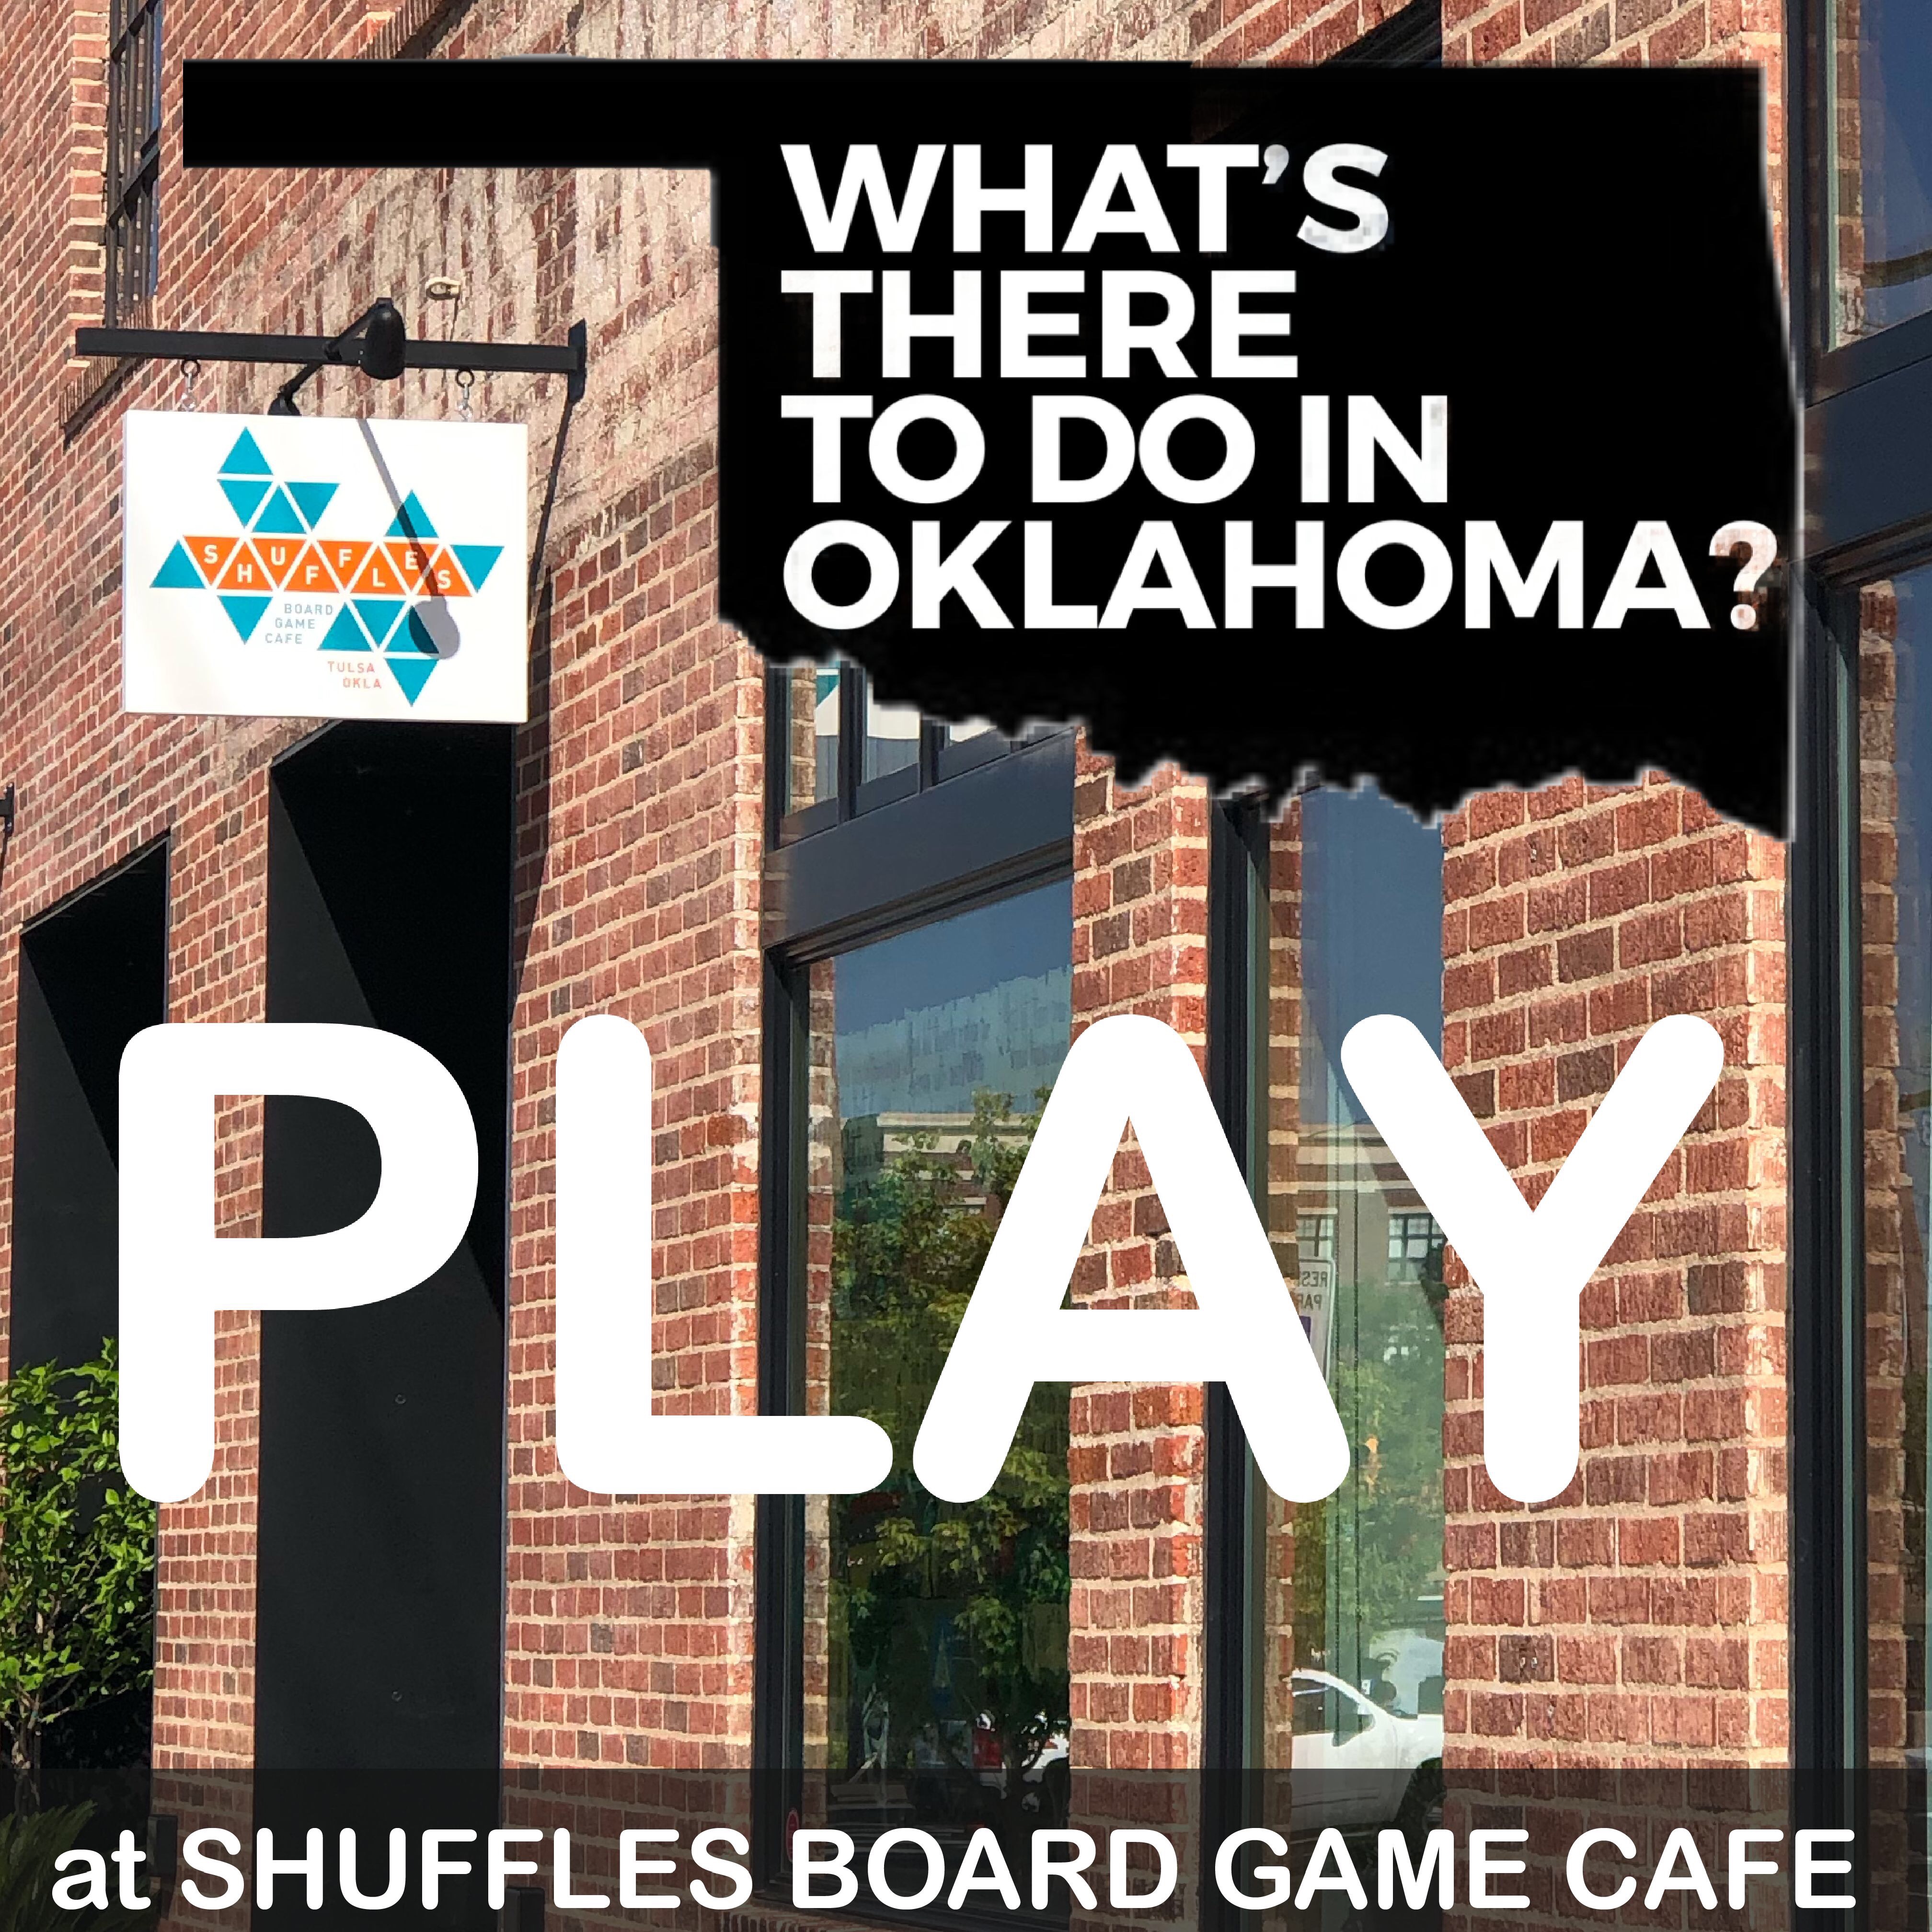 Shuffles Board Game Cafe in Downtown Tulsa, Oklahoma